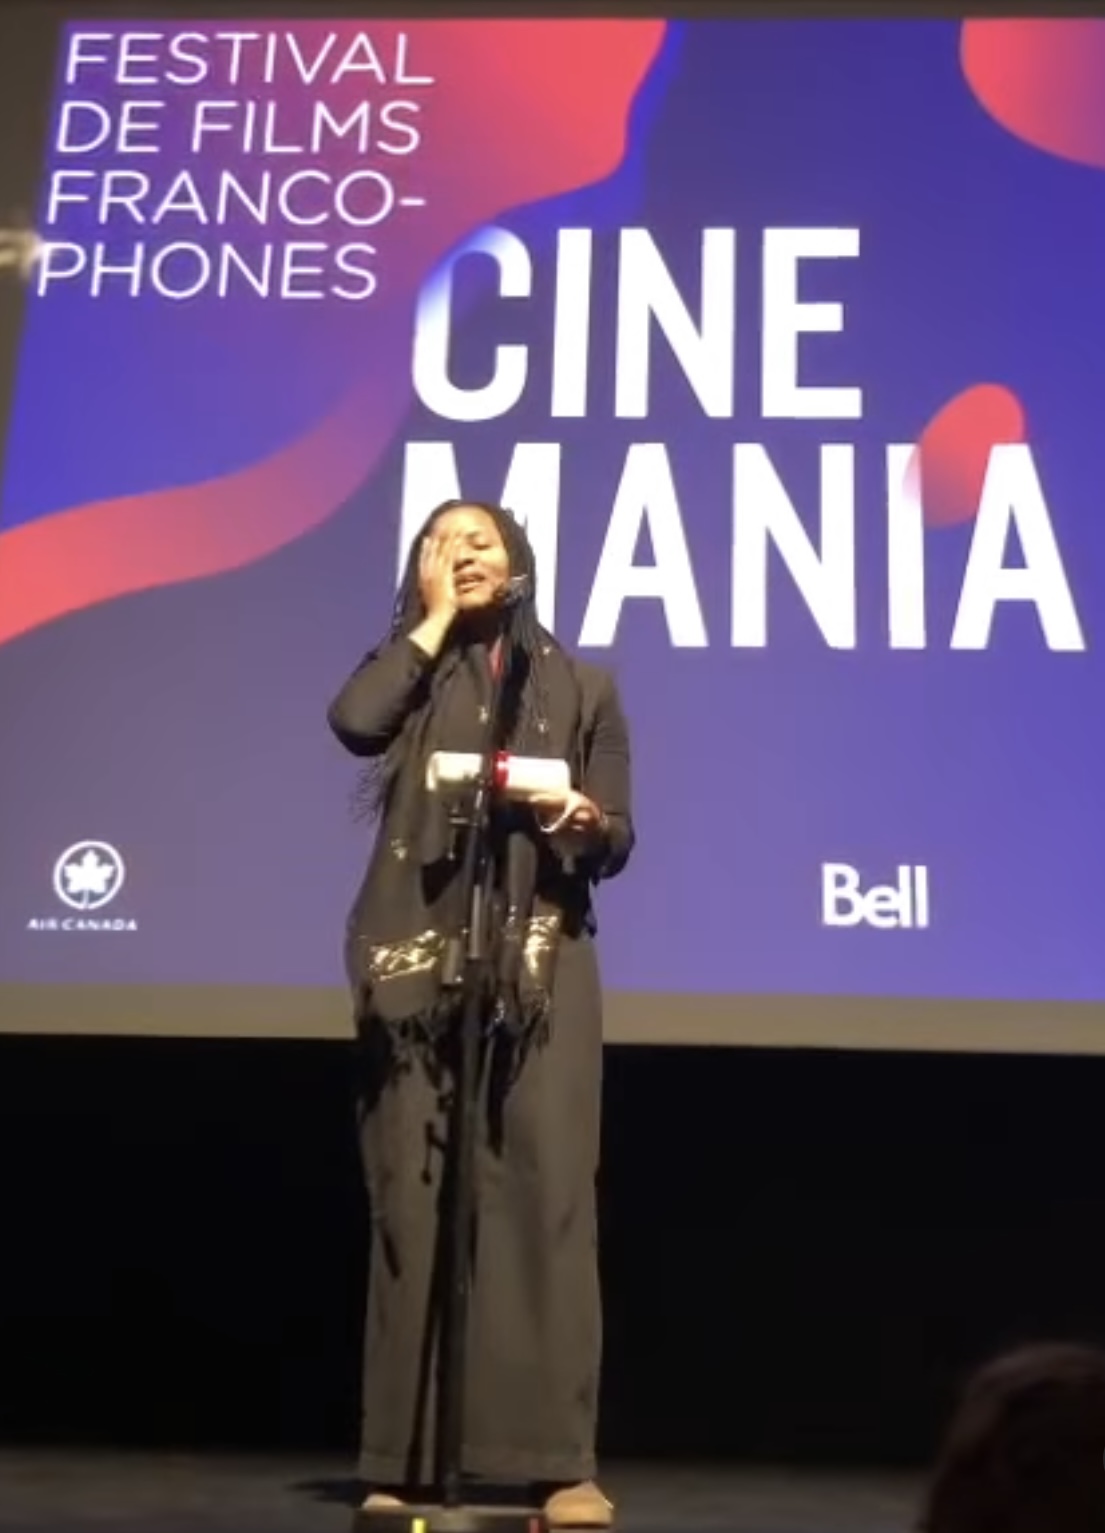   talk |  Frida: Best Movie TV5 Quebec-Canada Film Award

